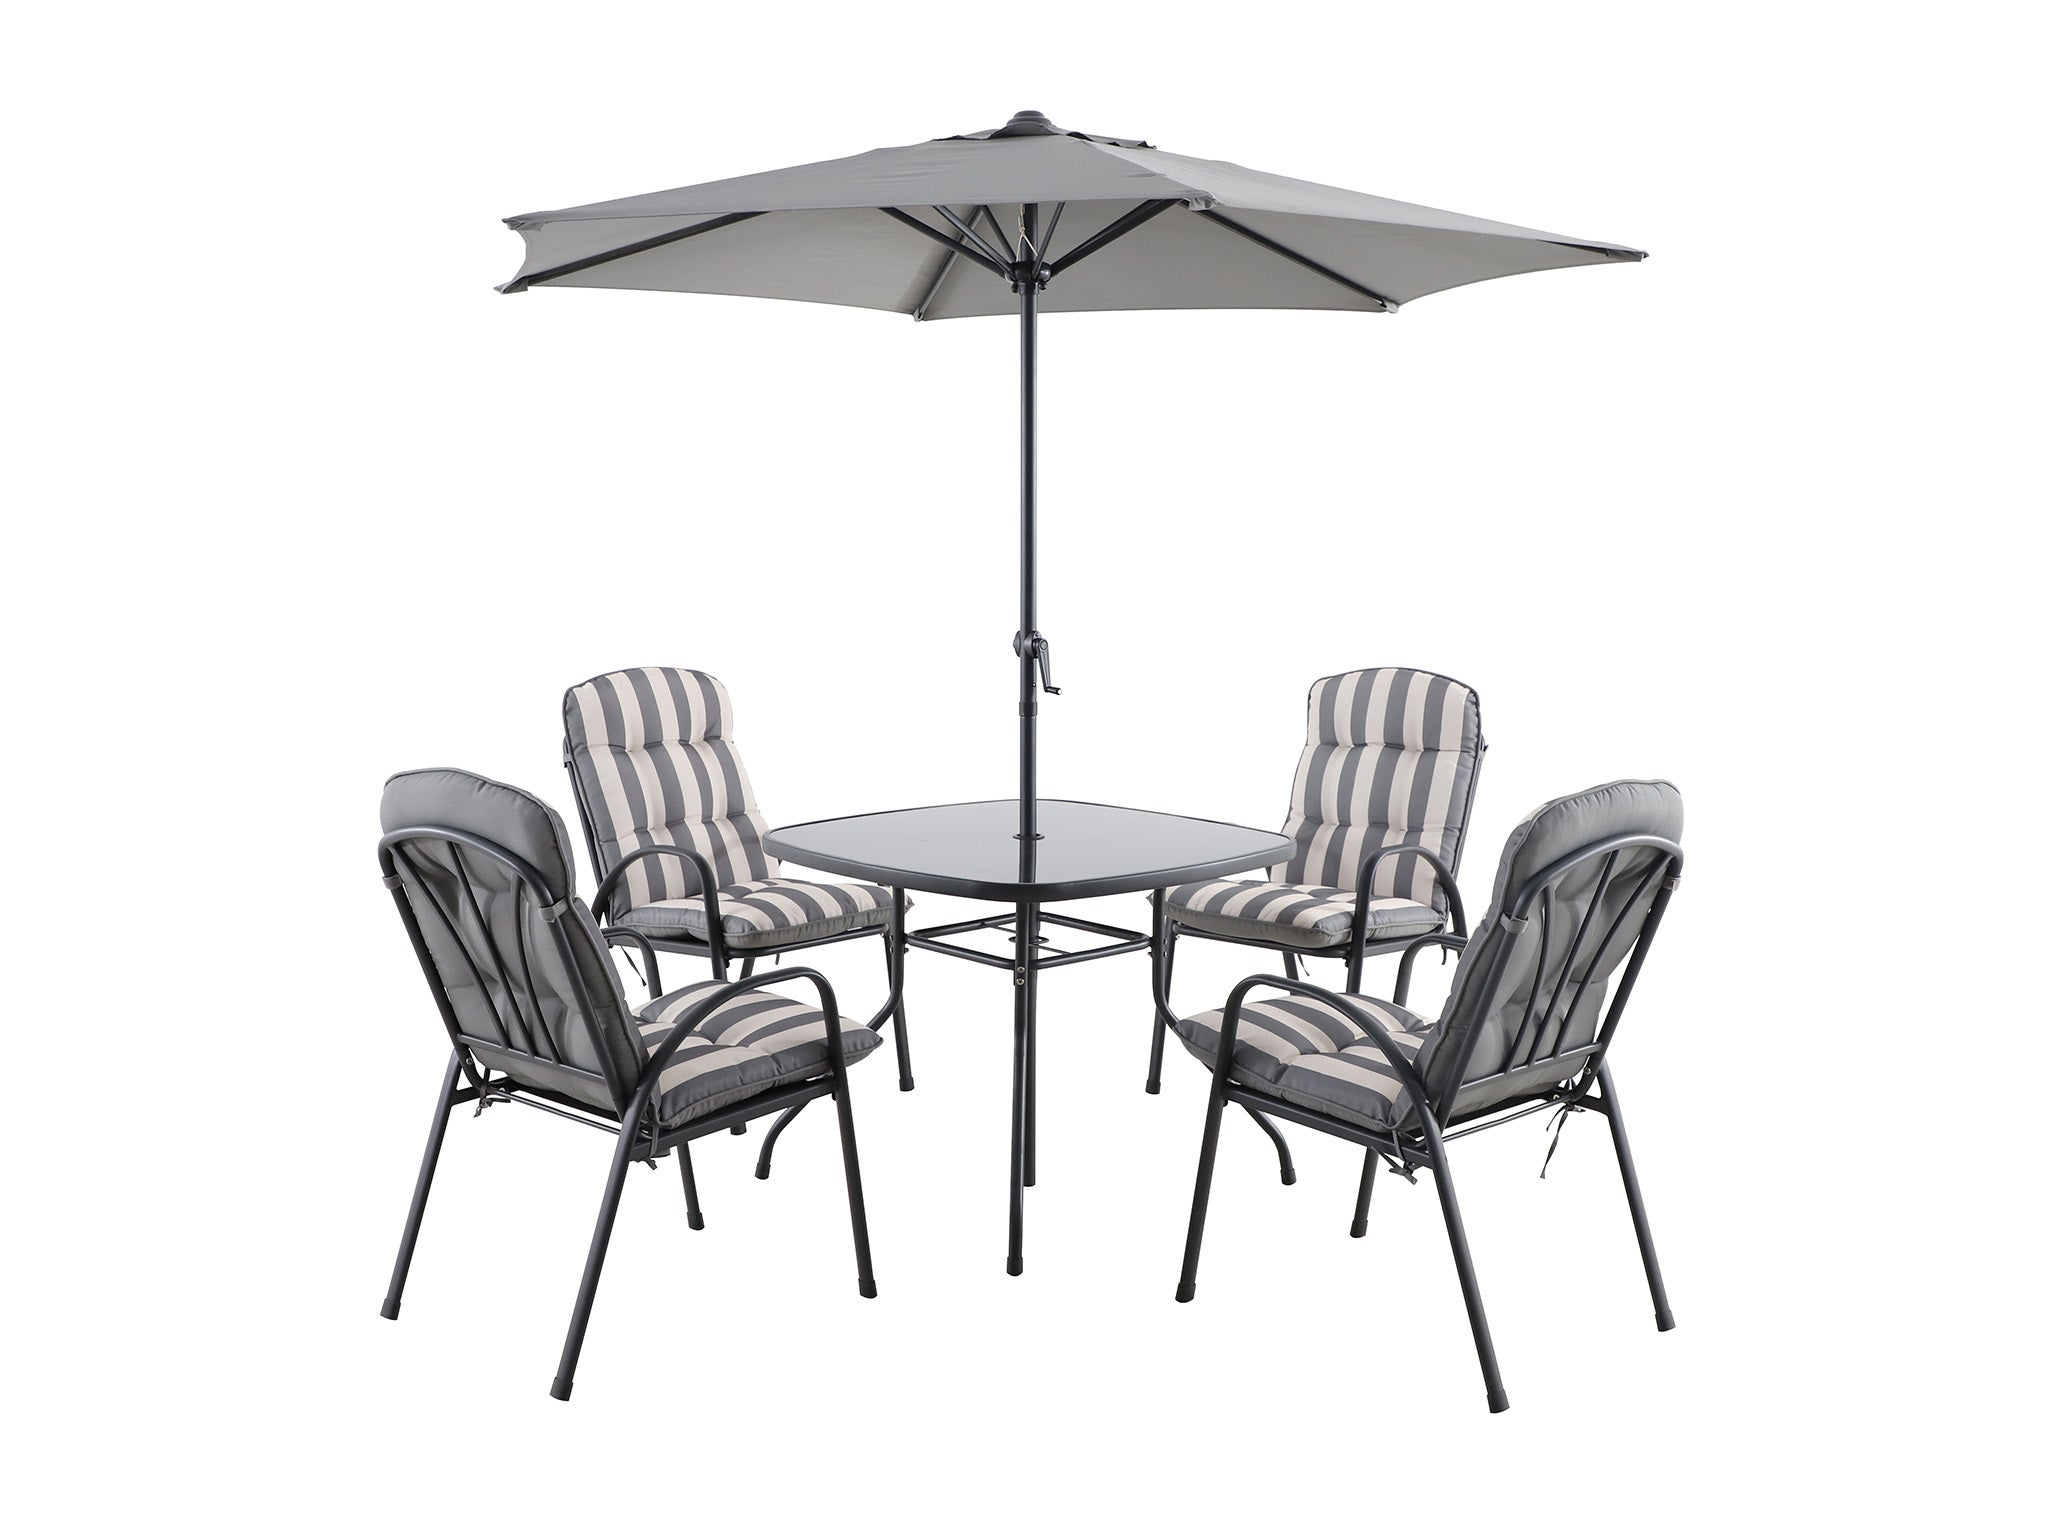 B&Q Colorado grey metal 4-seater dining set with grey parasol